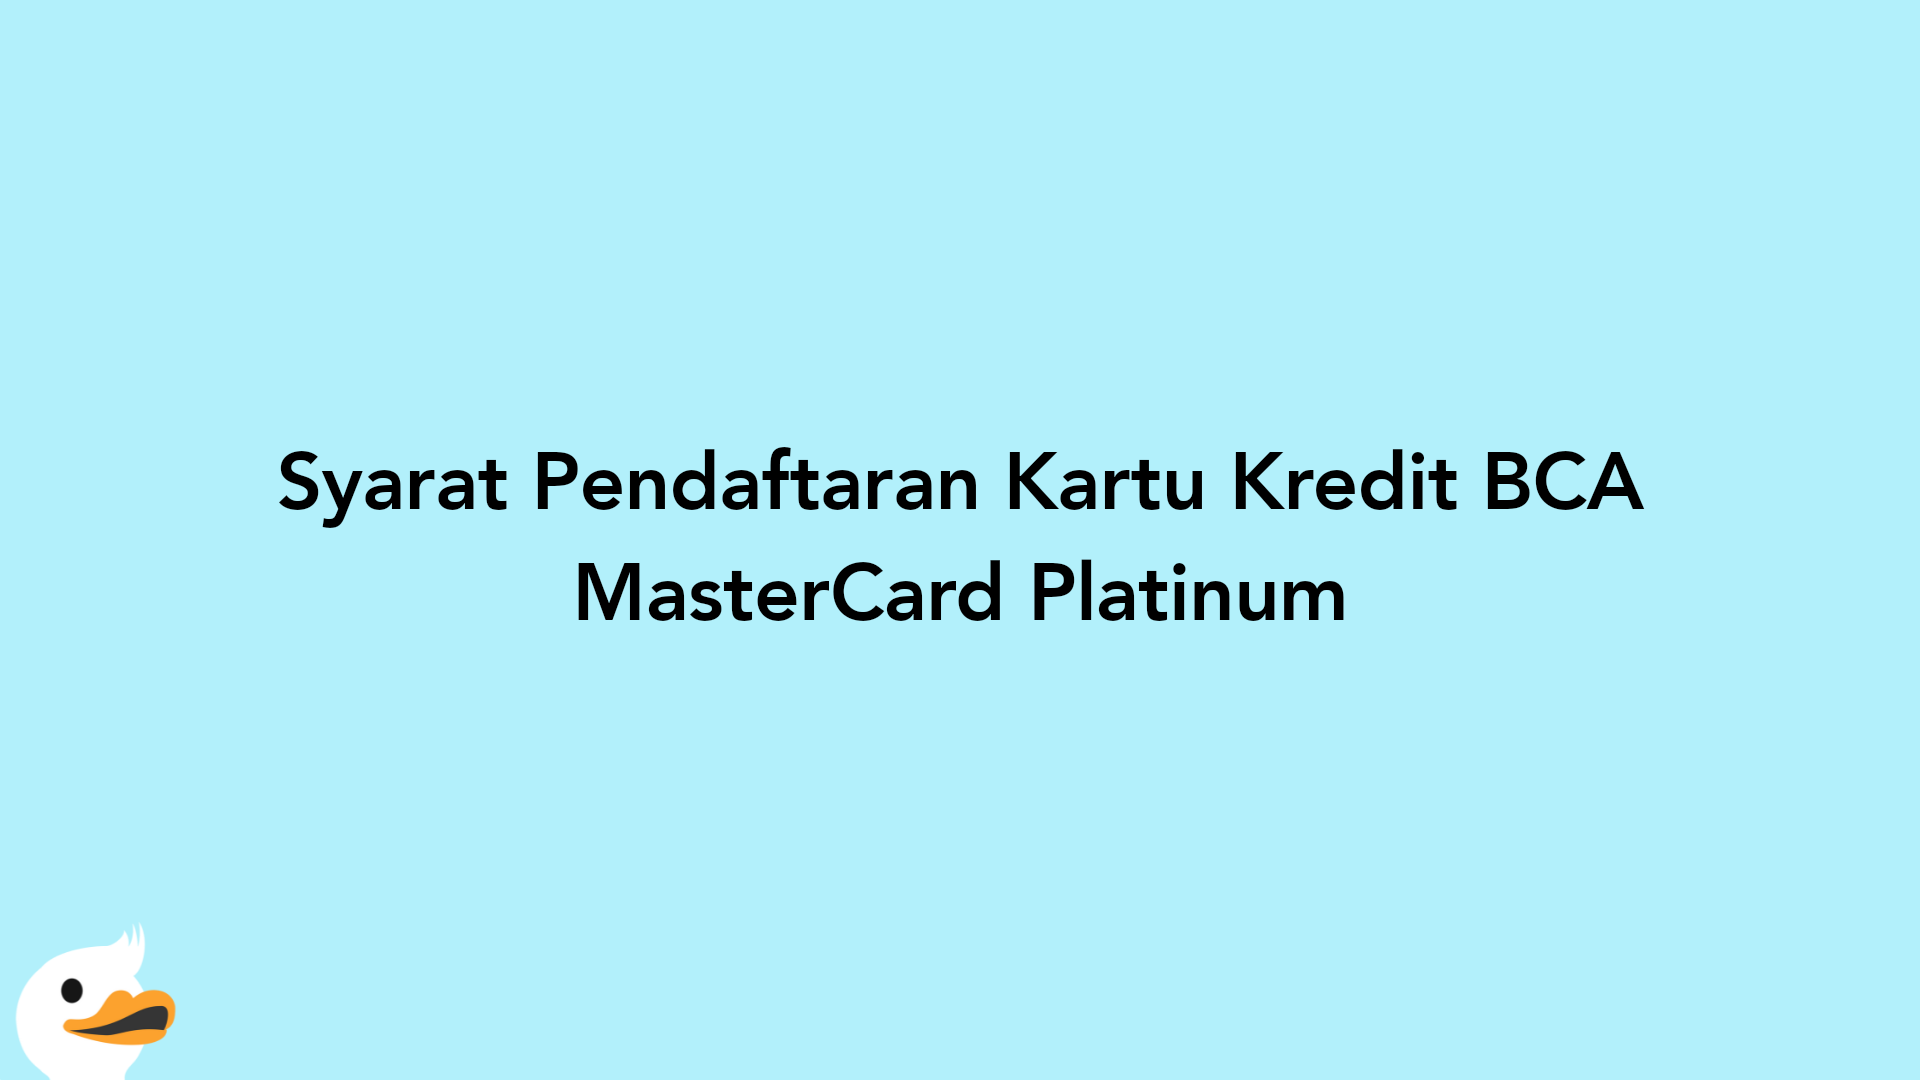 Syarat Pendaftaran Kartu Kredit BCA MasterCard Platinum